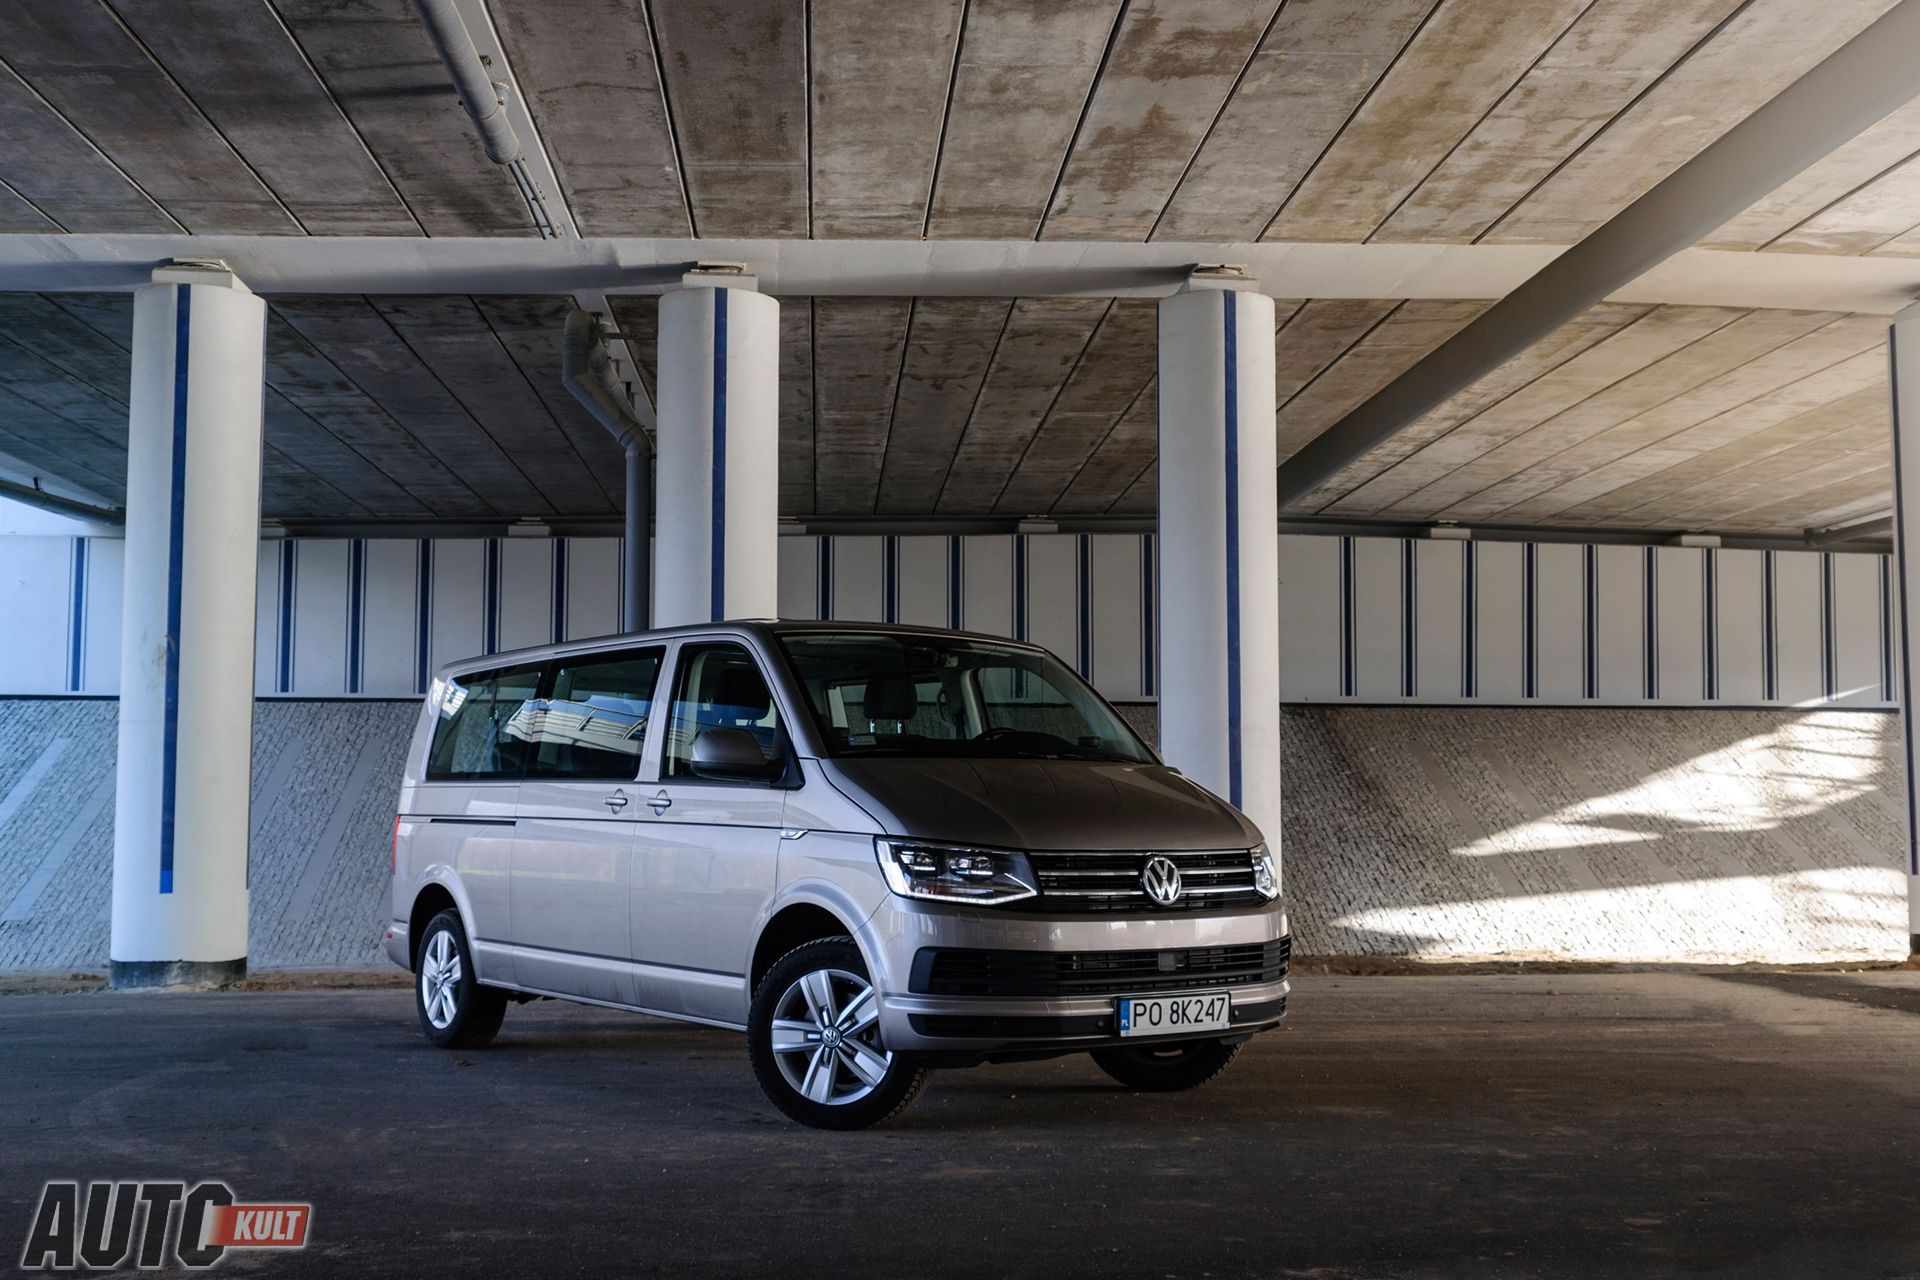 Volkswagen Caravelle 2.0 Tdi Comfortline (150 Km) - Test, Opinia, Spalanie, Cena | Autokult.pl